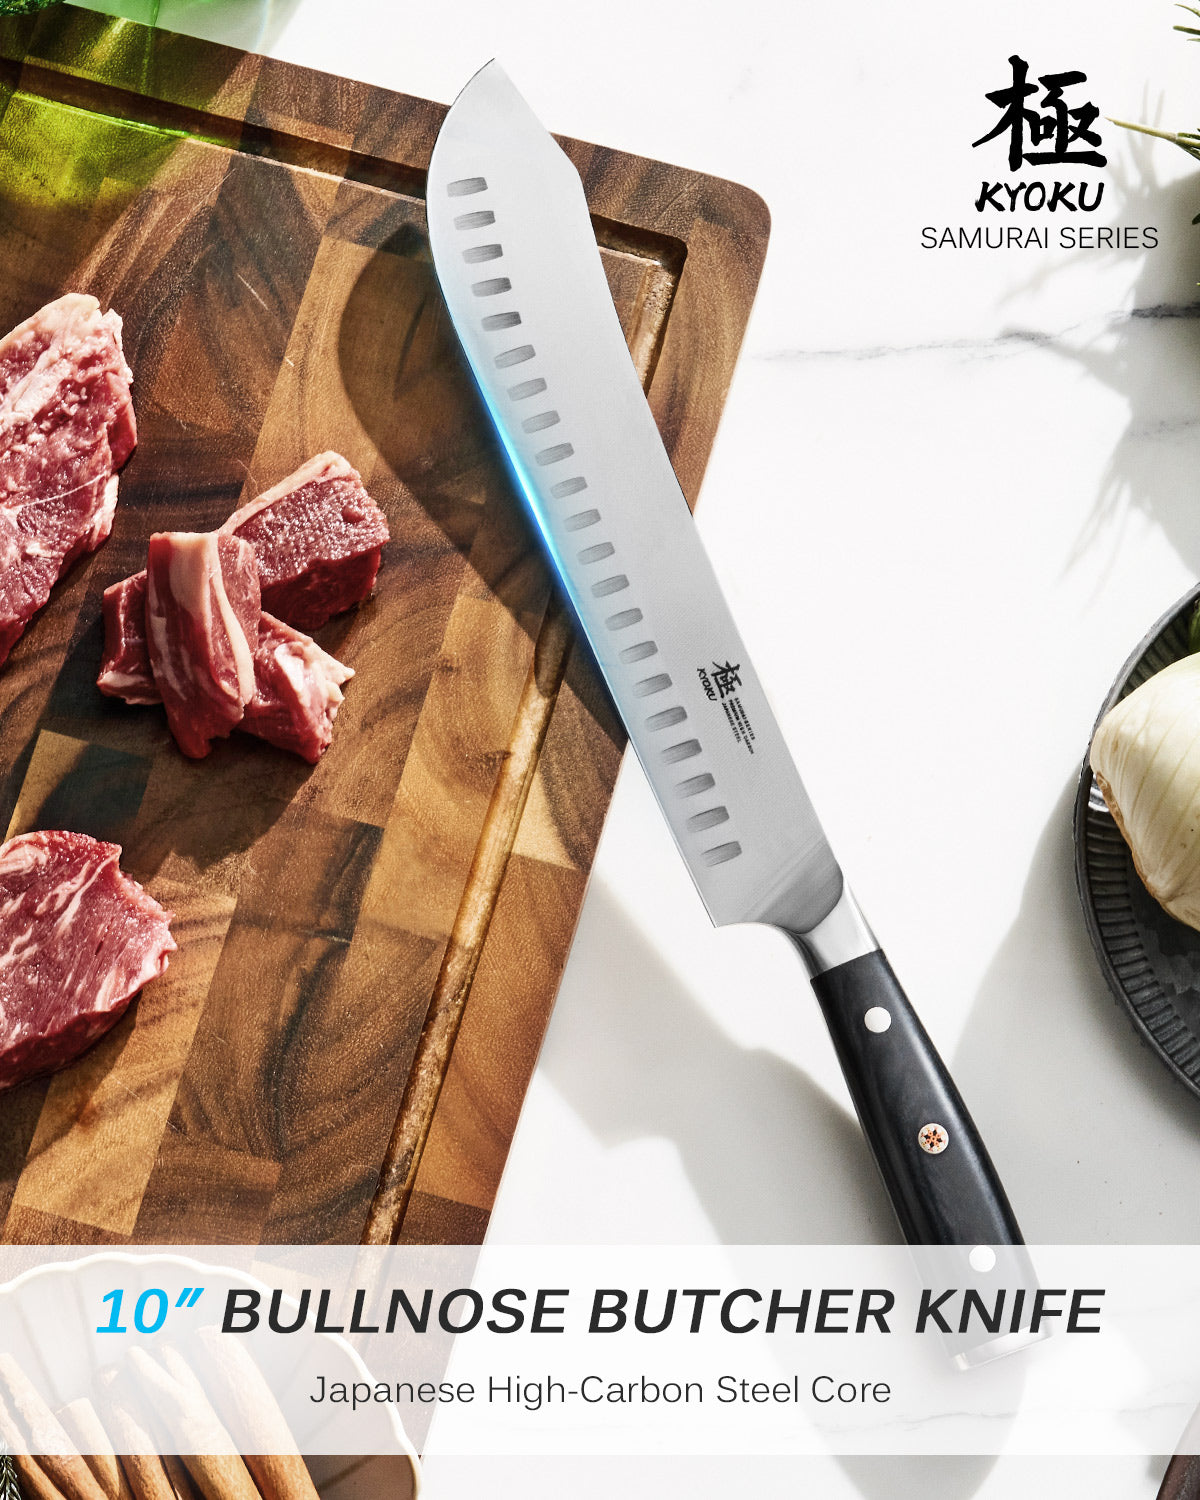 Kyoku Bullnose Butcher Knife 10 - Japanese High Carbon Steel丨Samurai Series